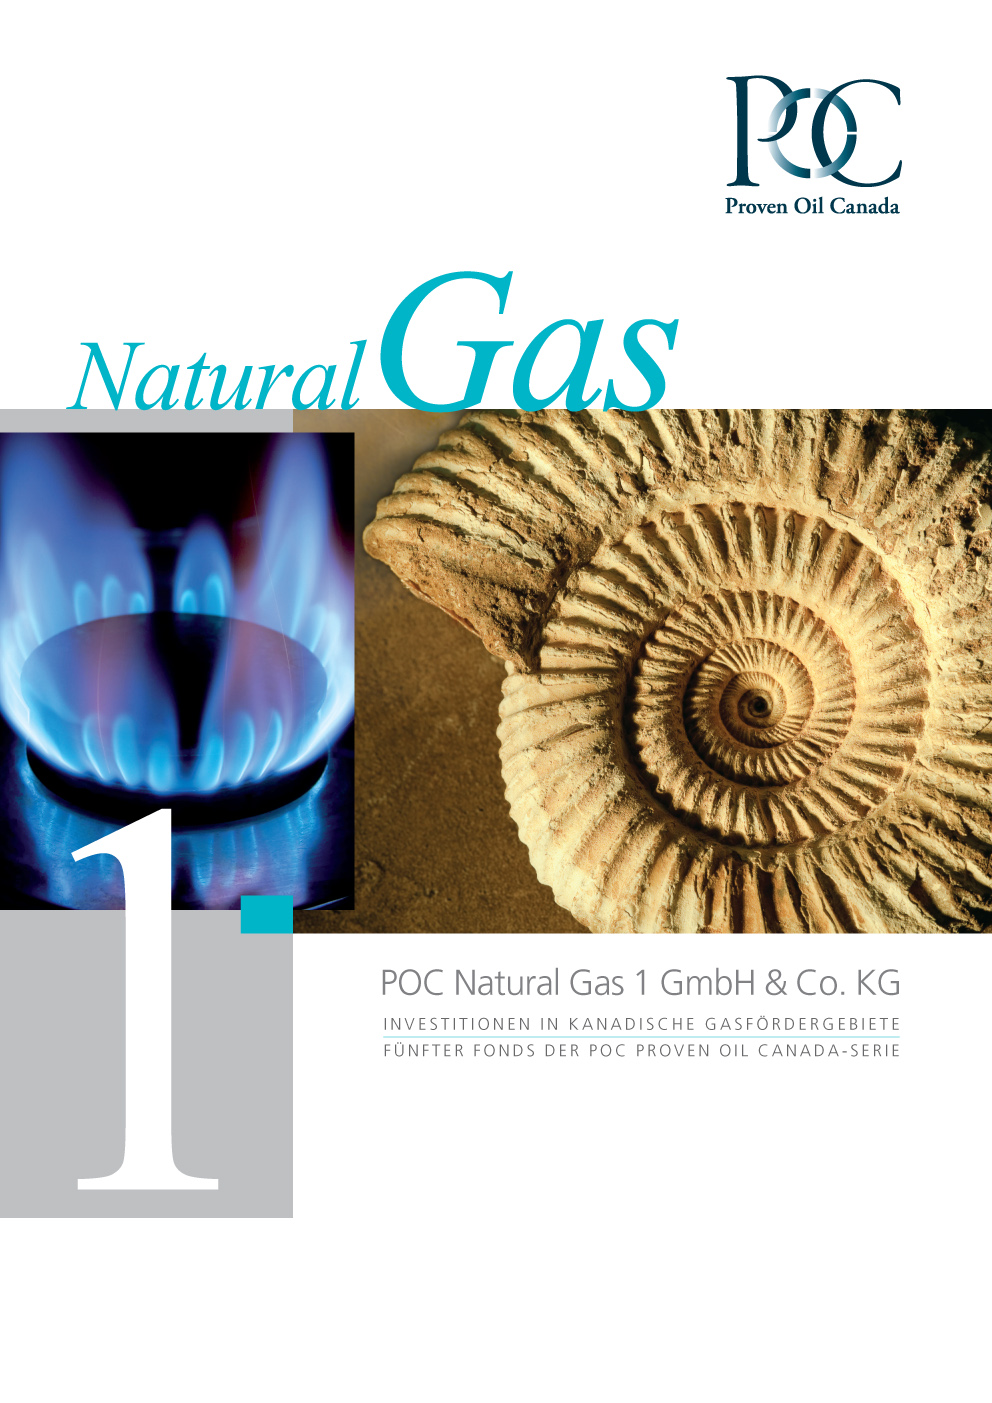 Titel Emissionsprospekt POC Natural Gas 1